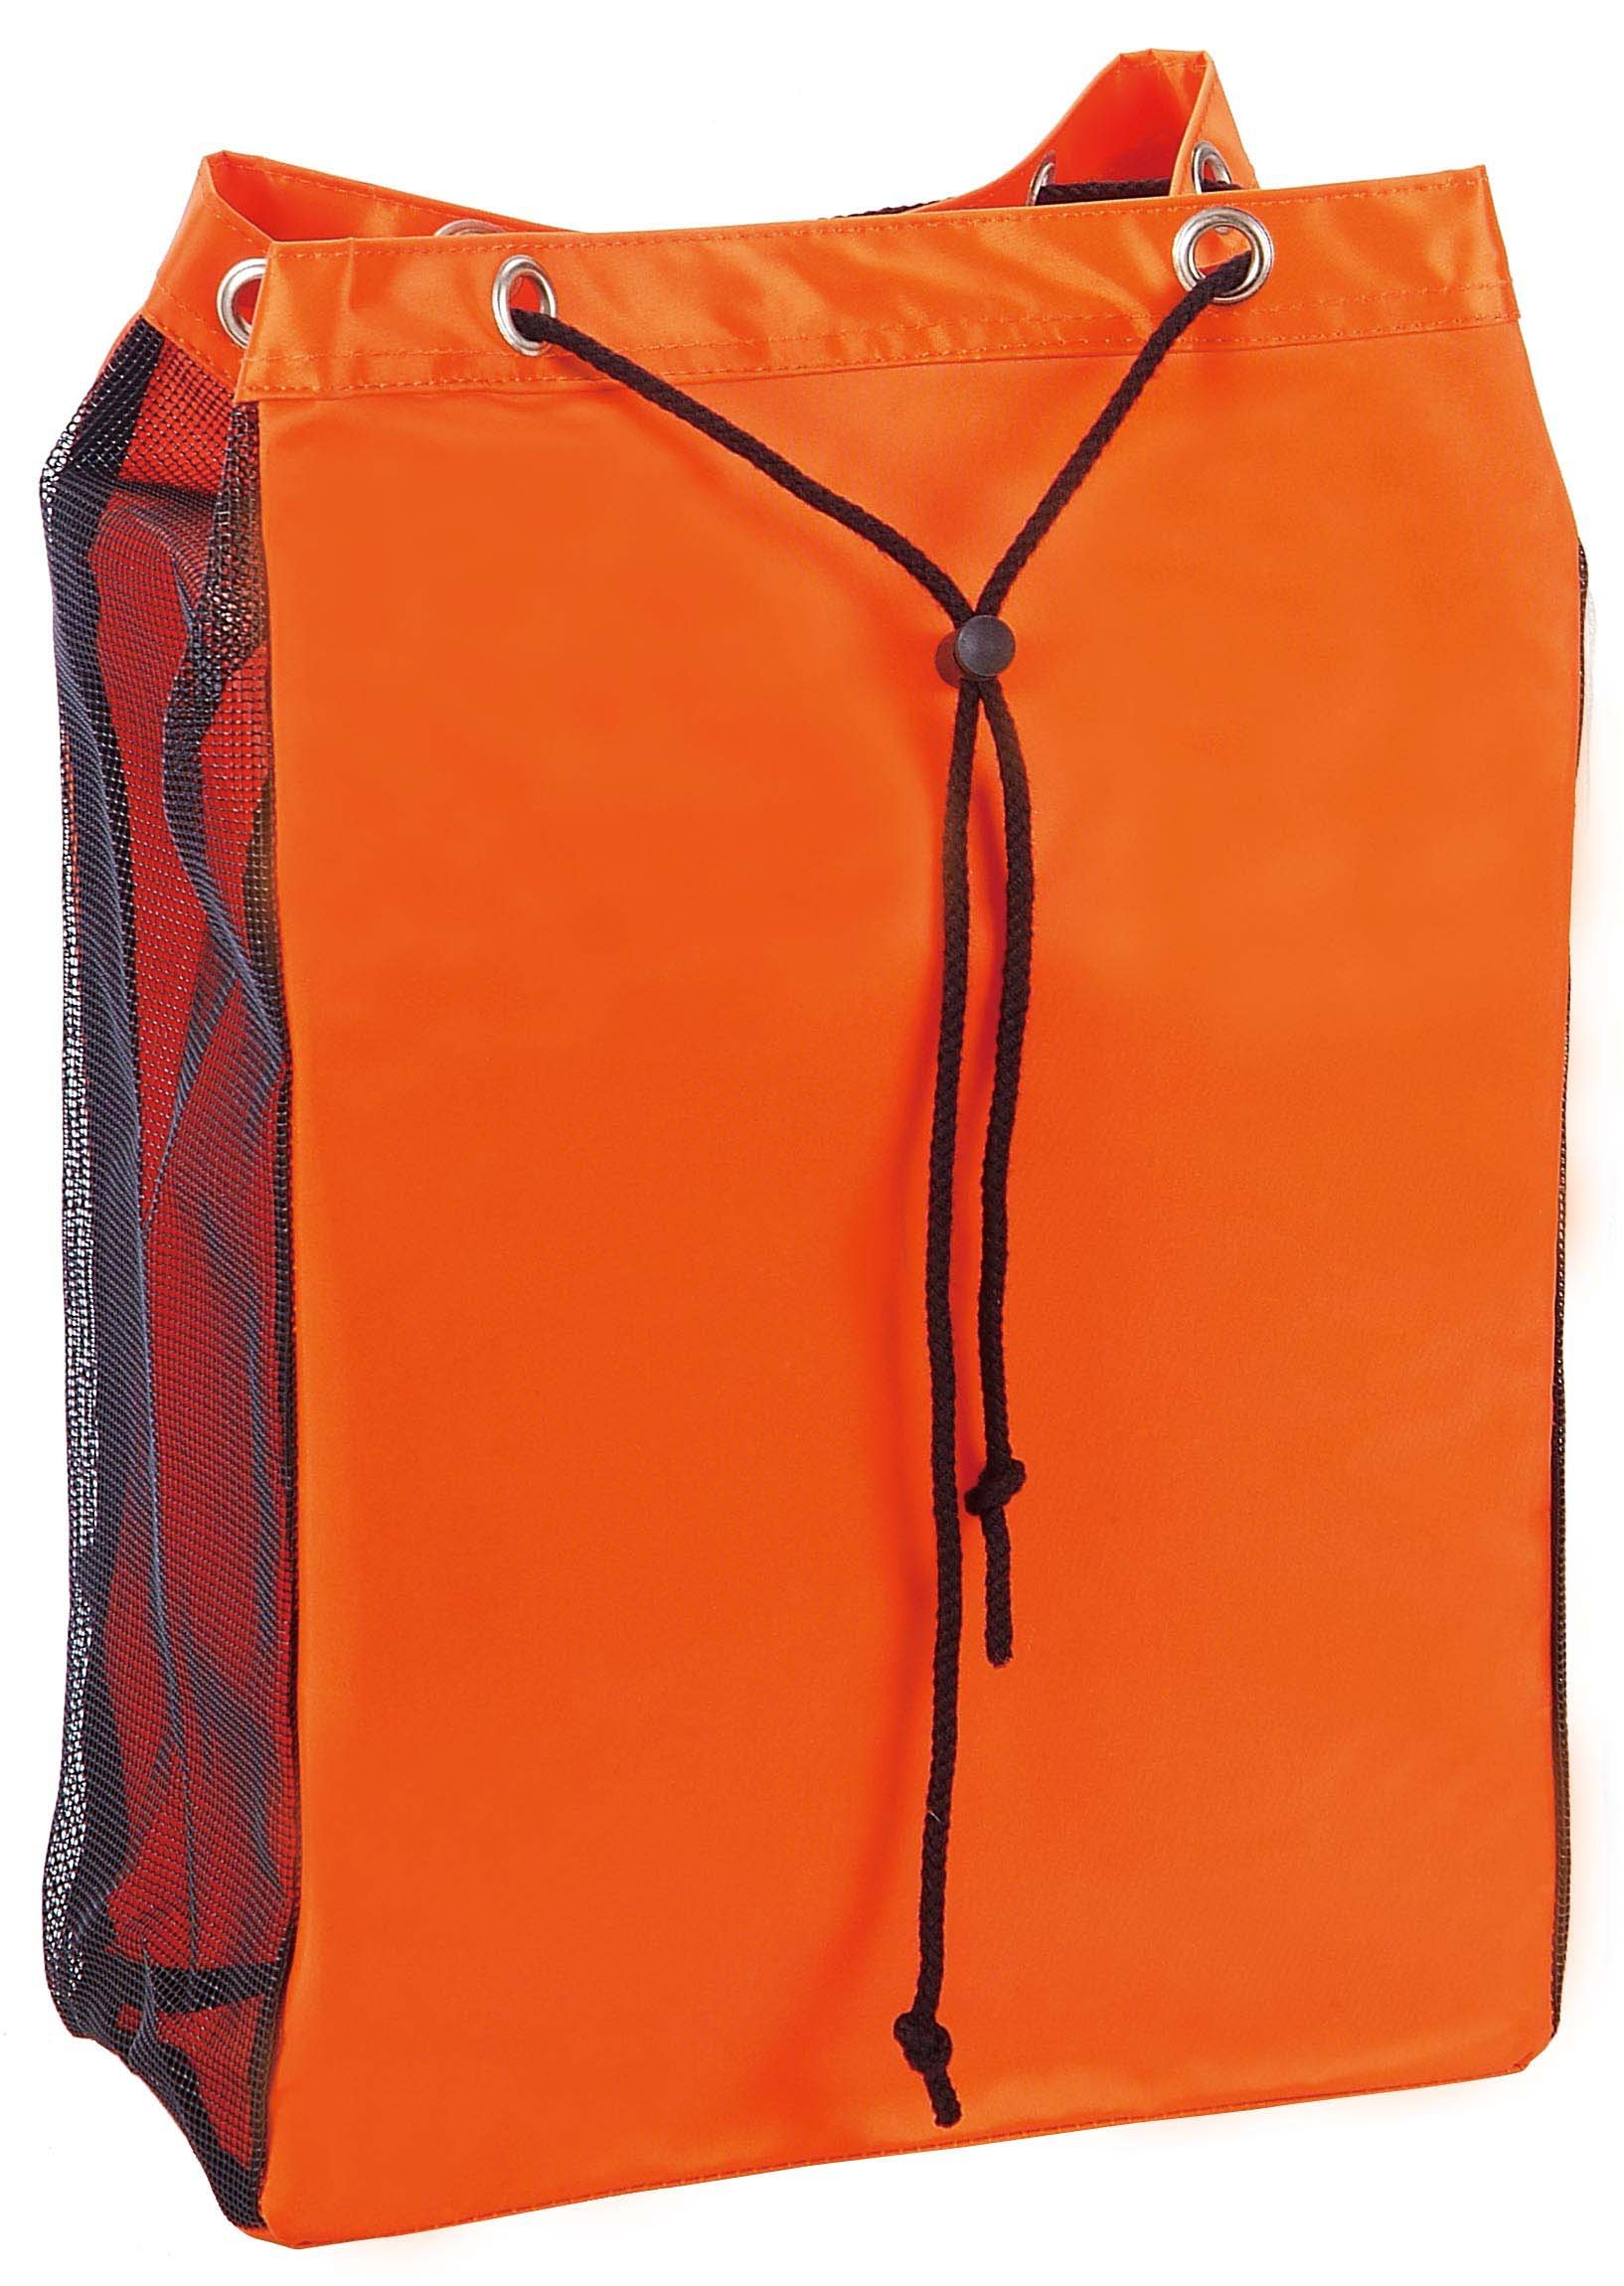 B3028 - The Sport Drawstring Backpack